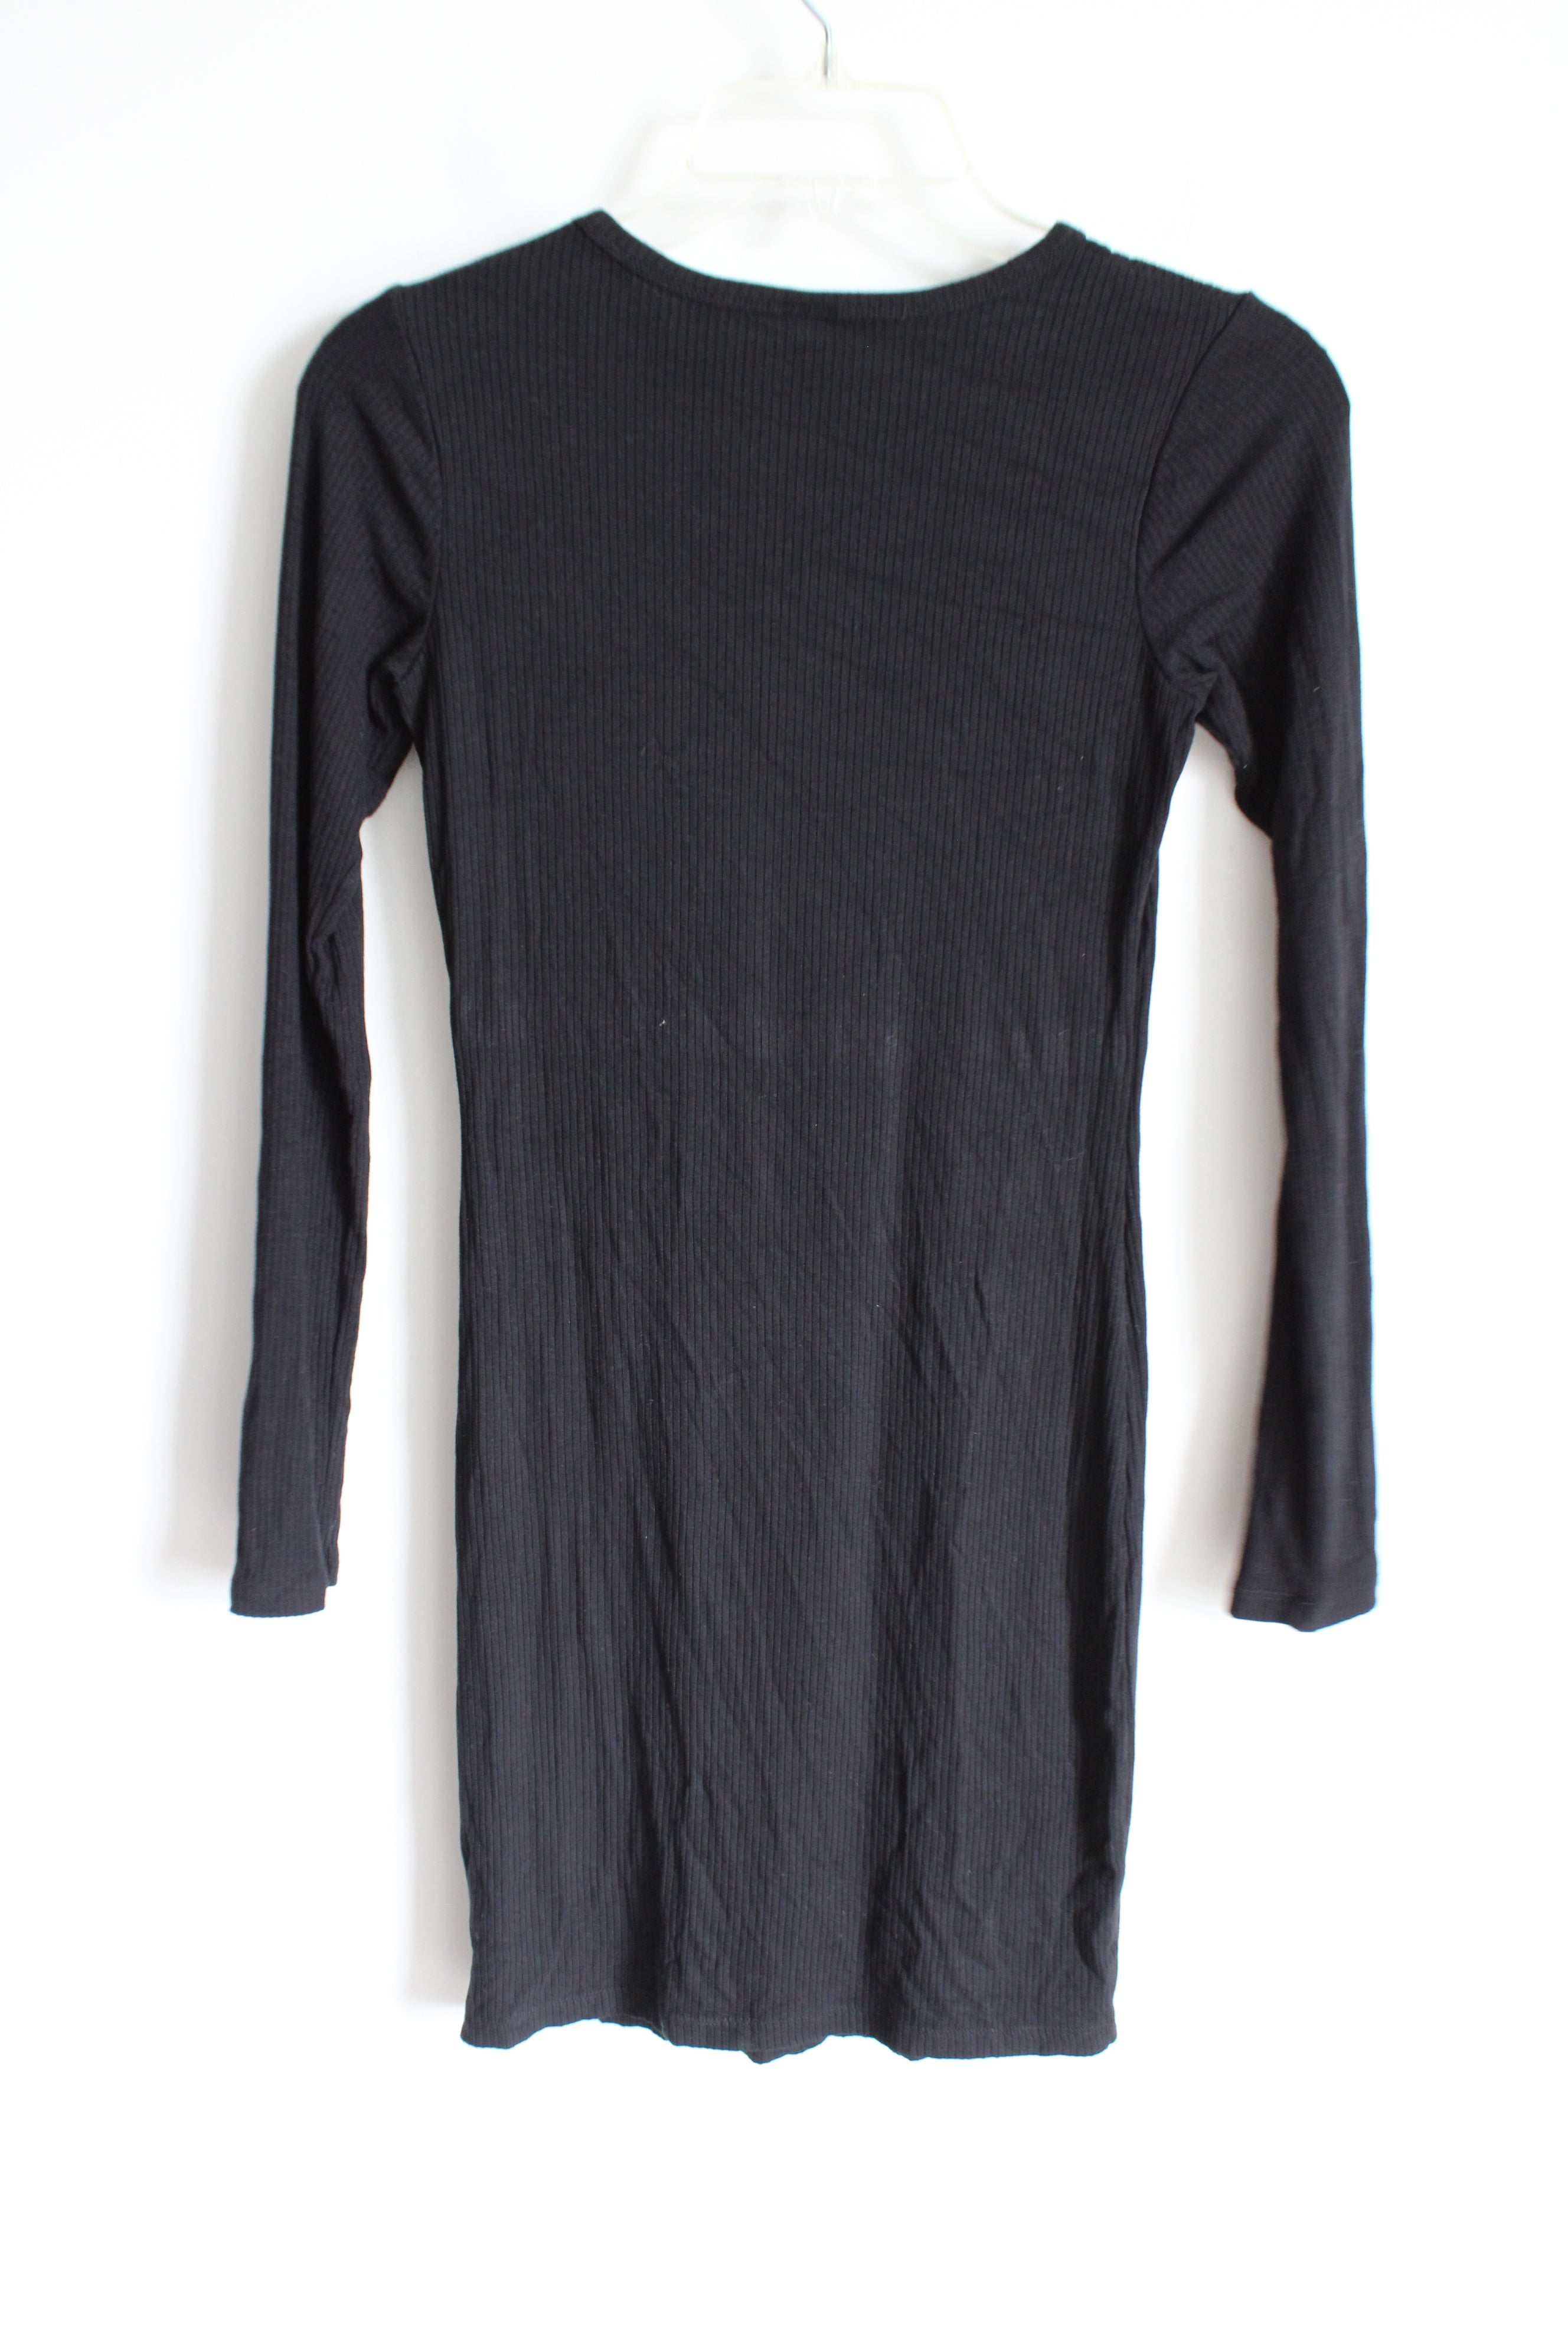 Art Class Black Ribbed Long Sleeved Dress | Youth XL (14/16)